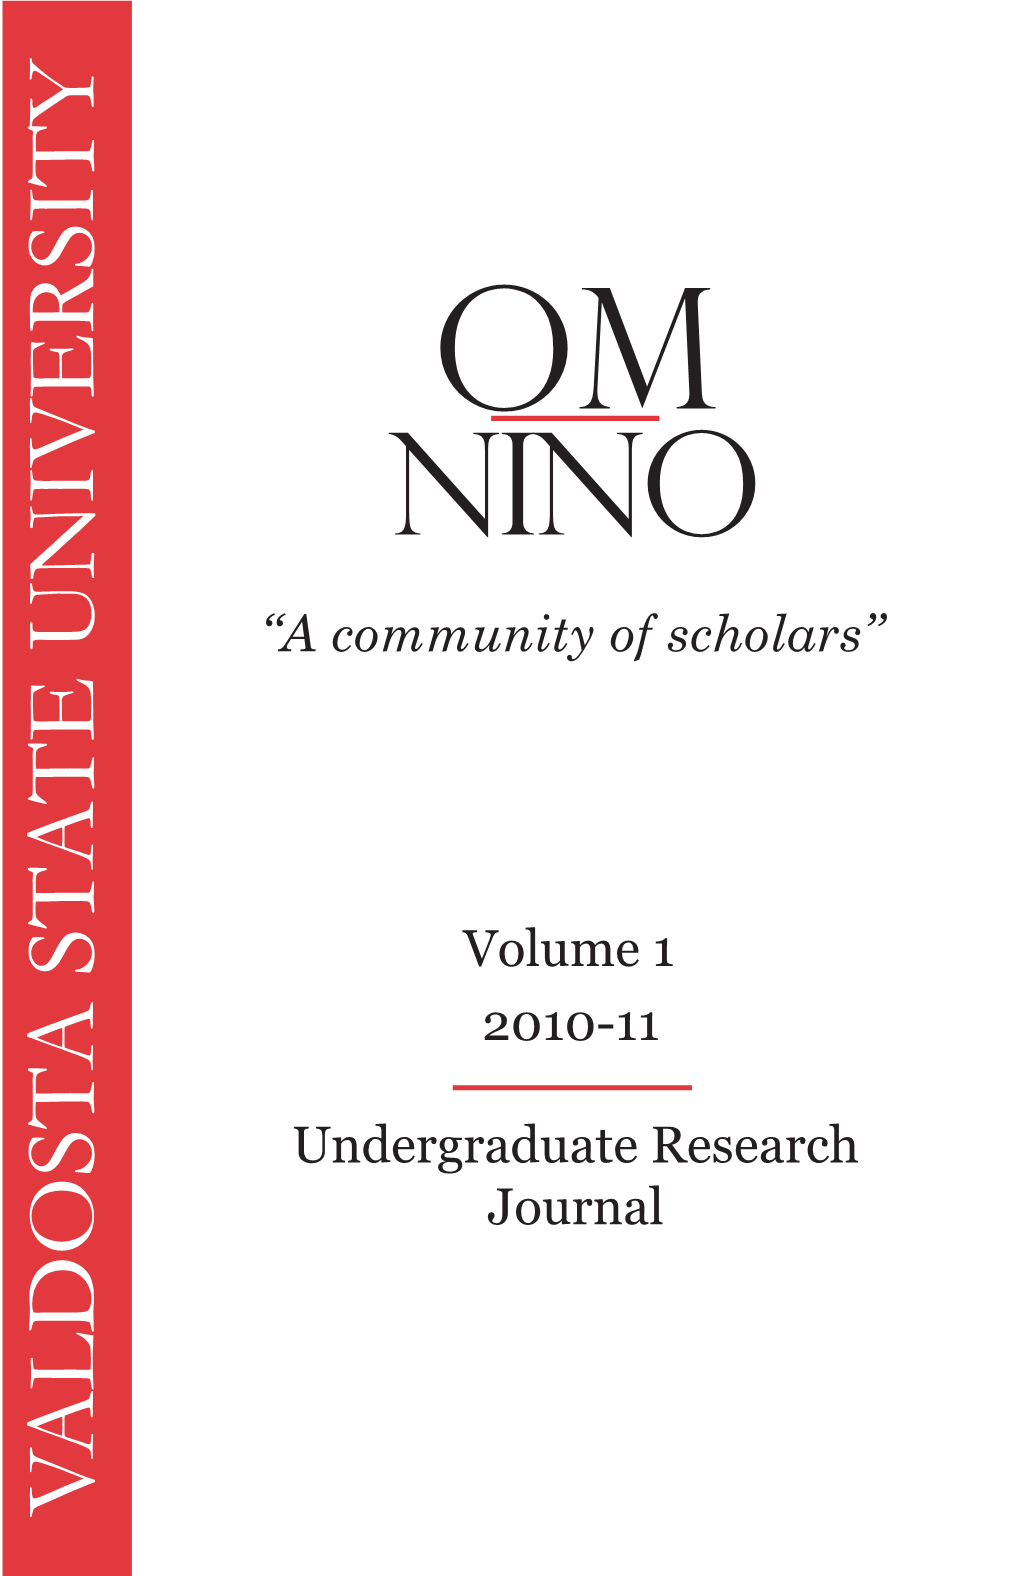 OMNINO Undergraduate Research Journal